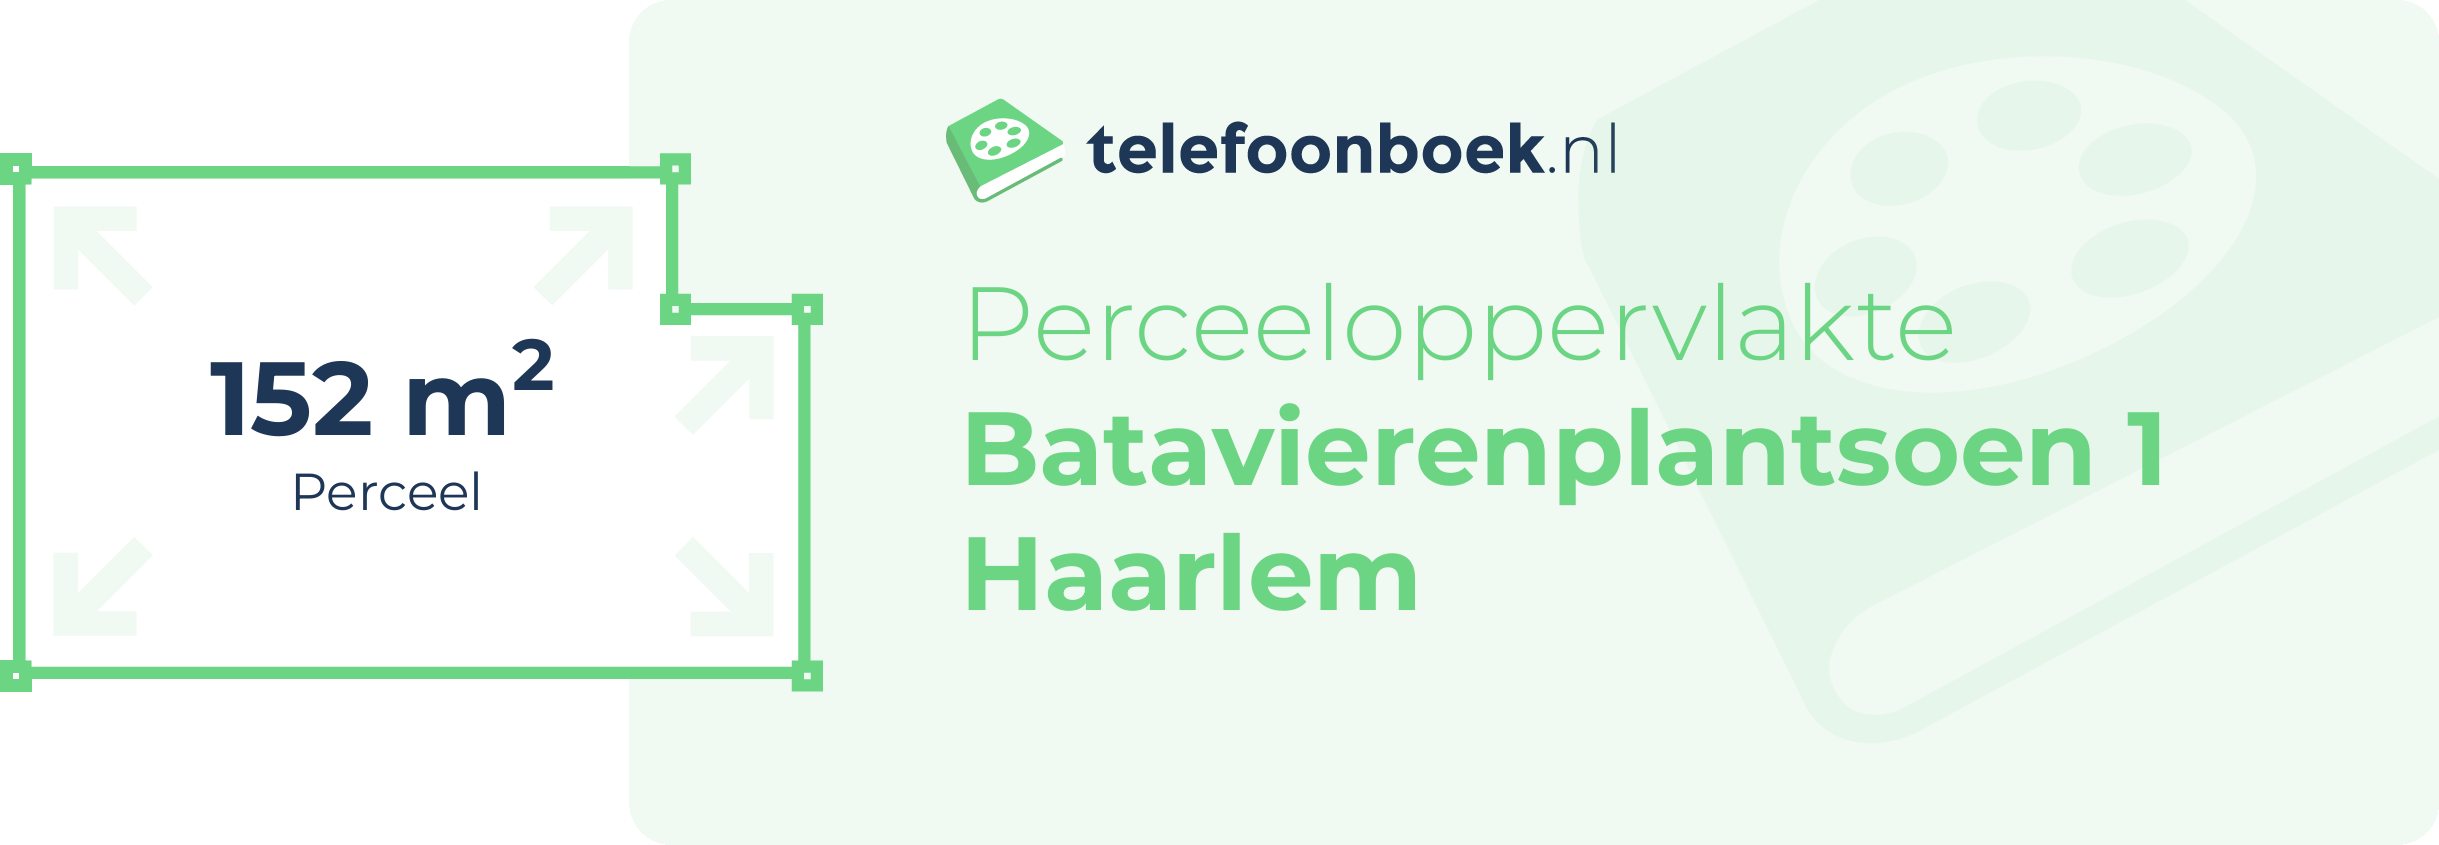 Perceeloppervlakte Batavierenplantsoen 1 Haarlem